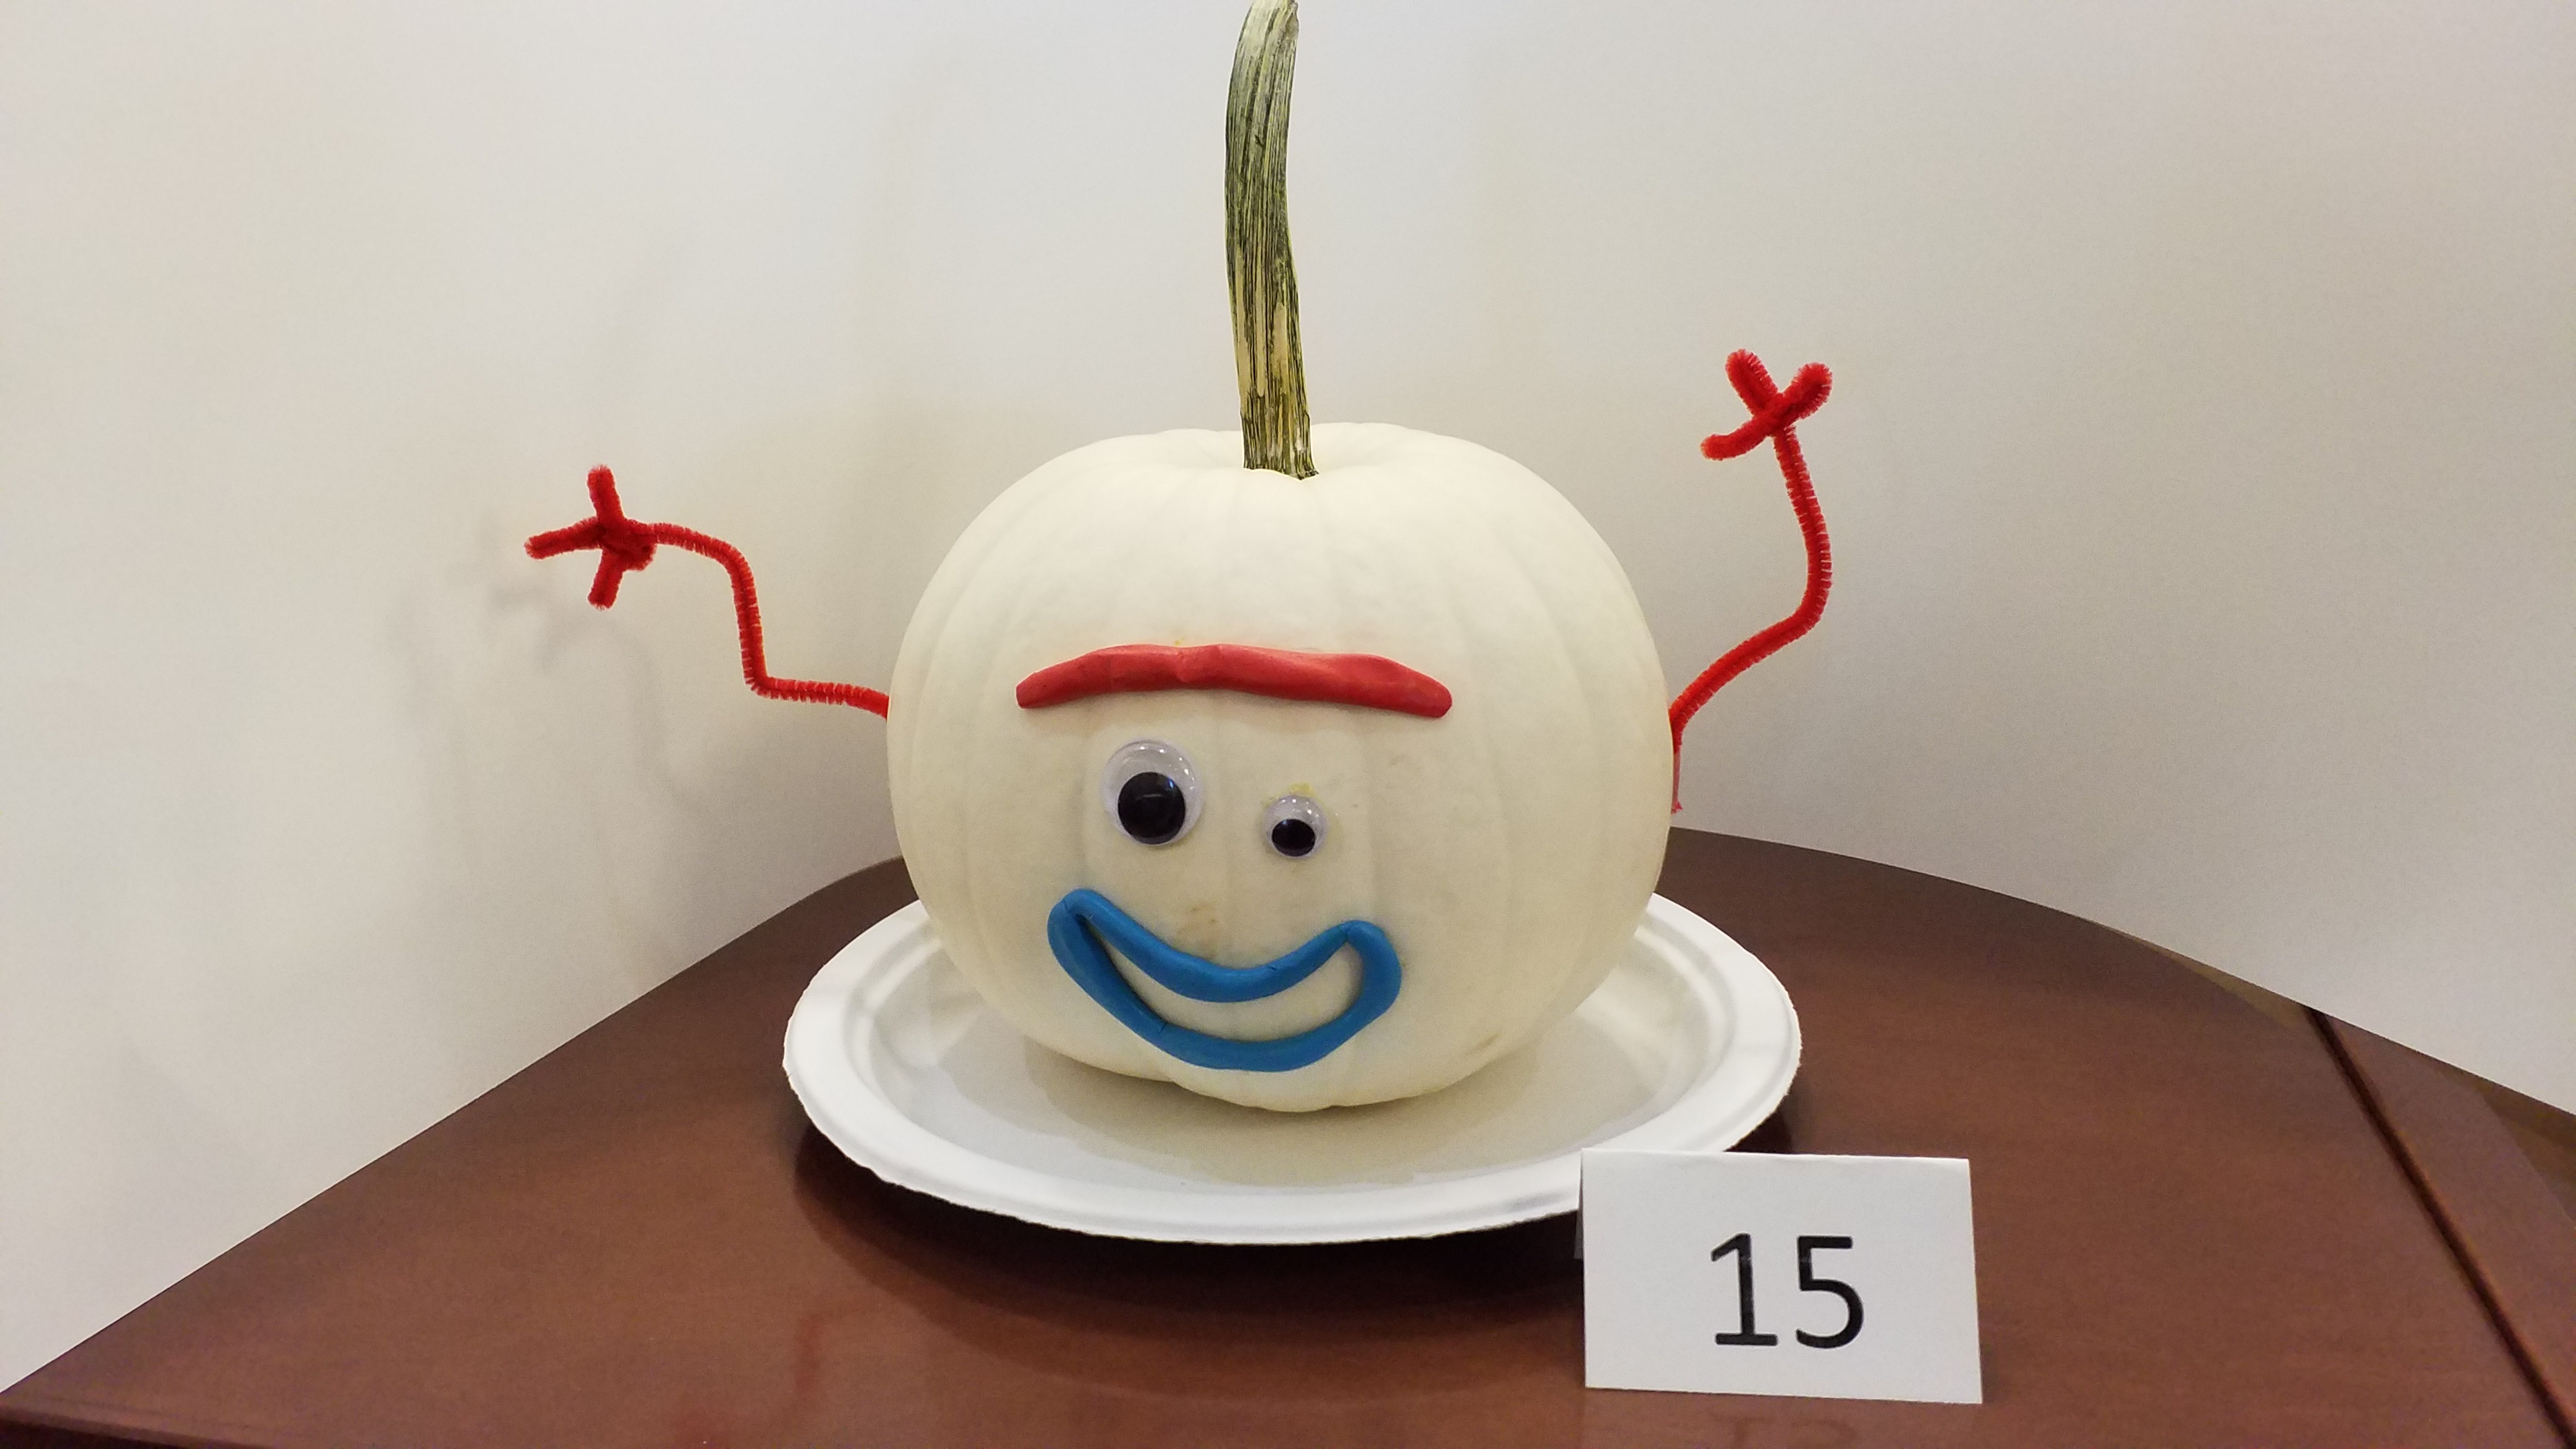 Pumpkin decorated as children's book character